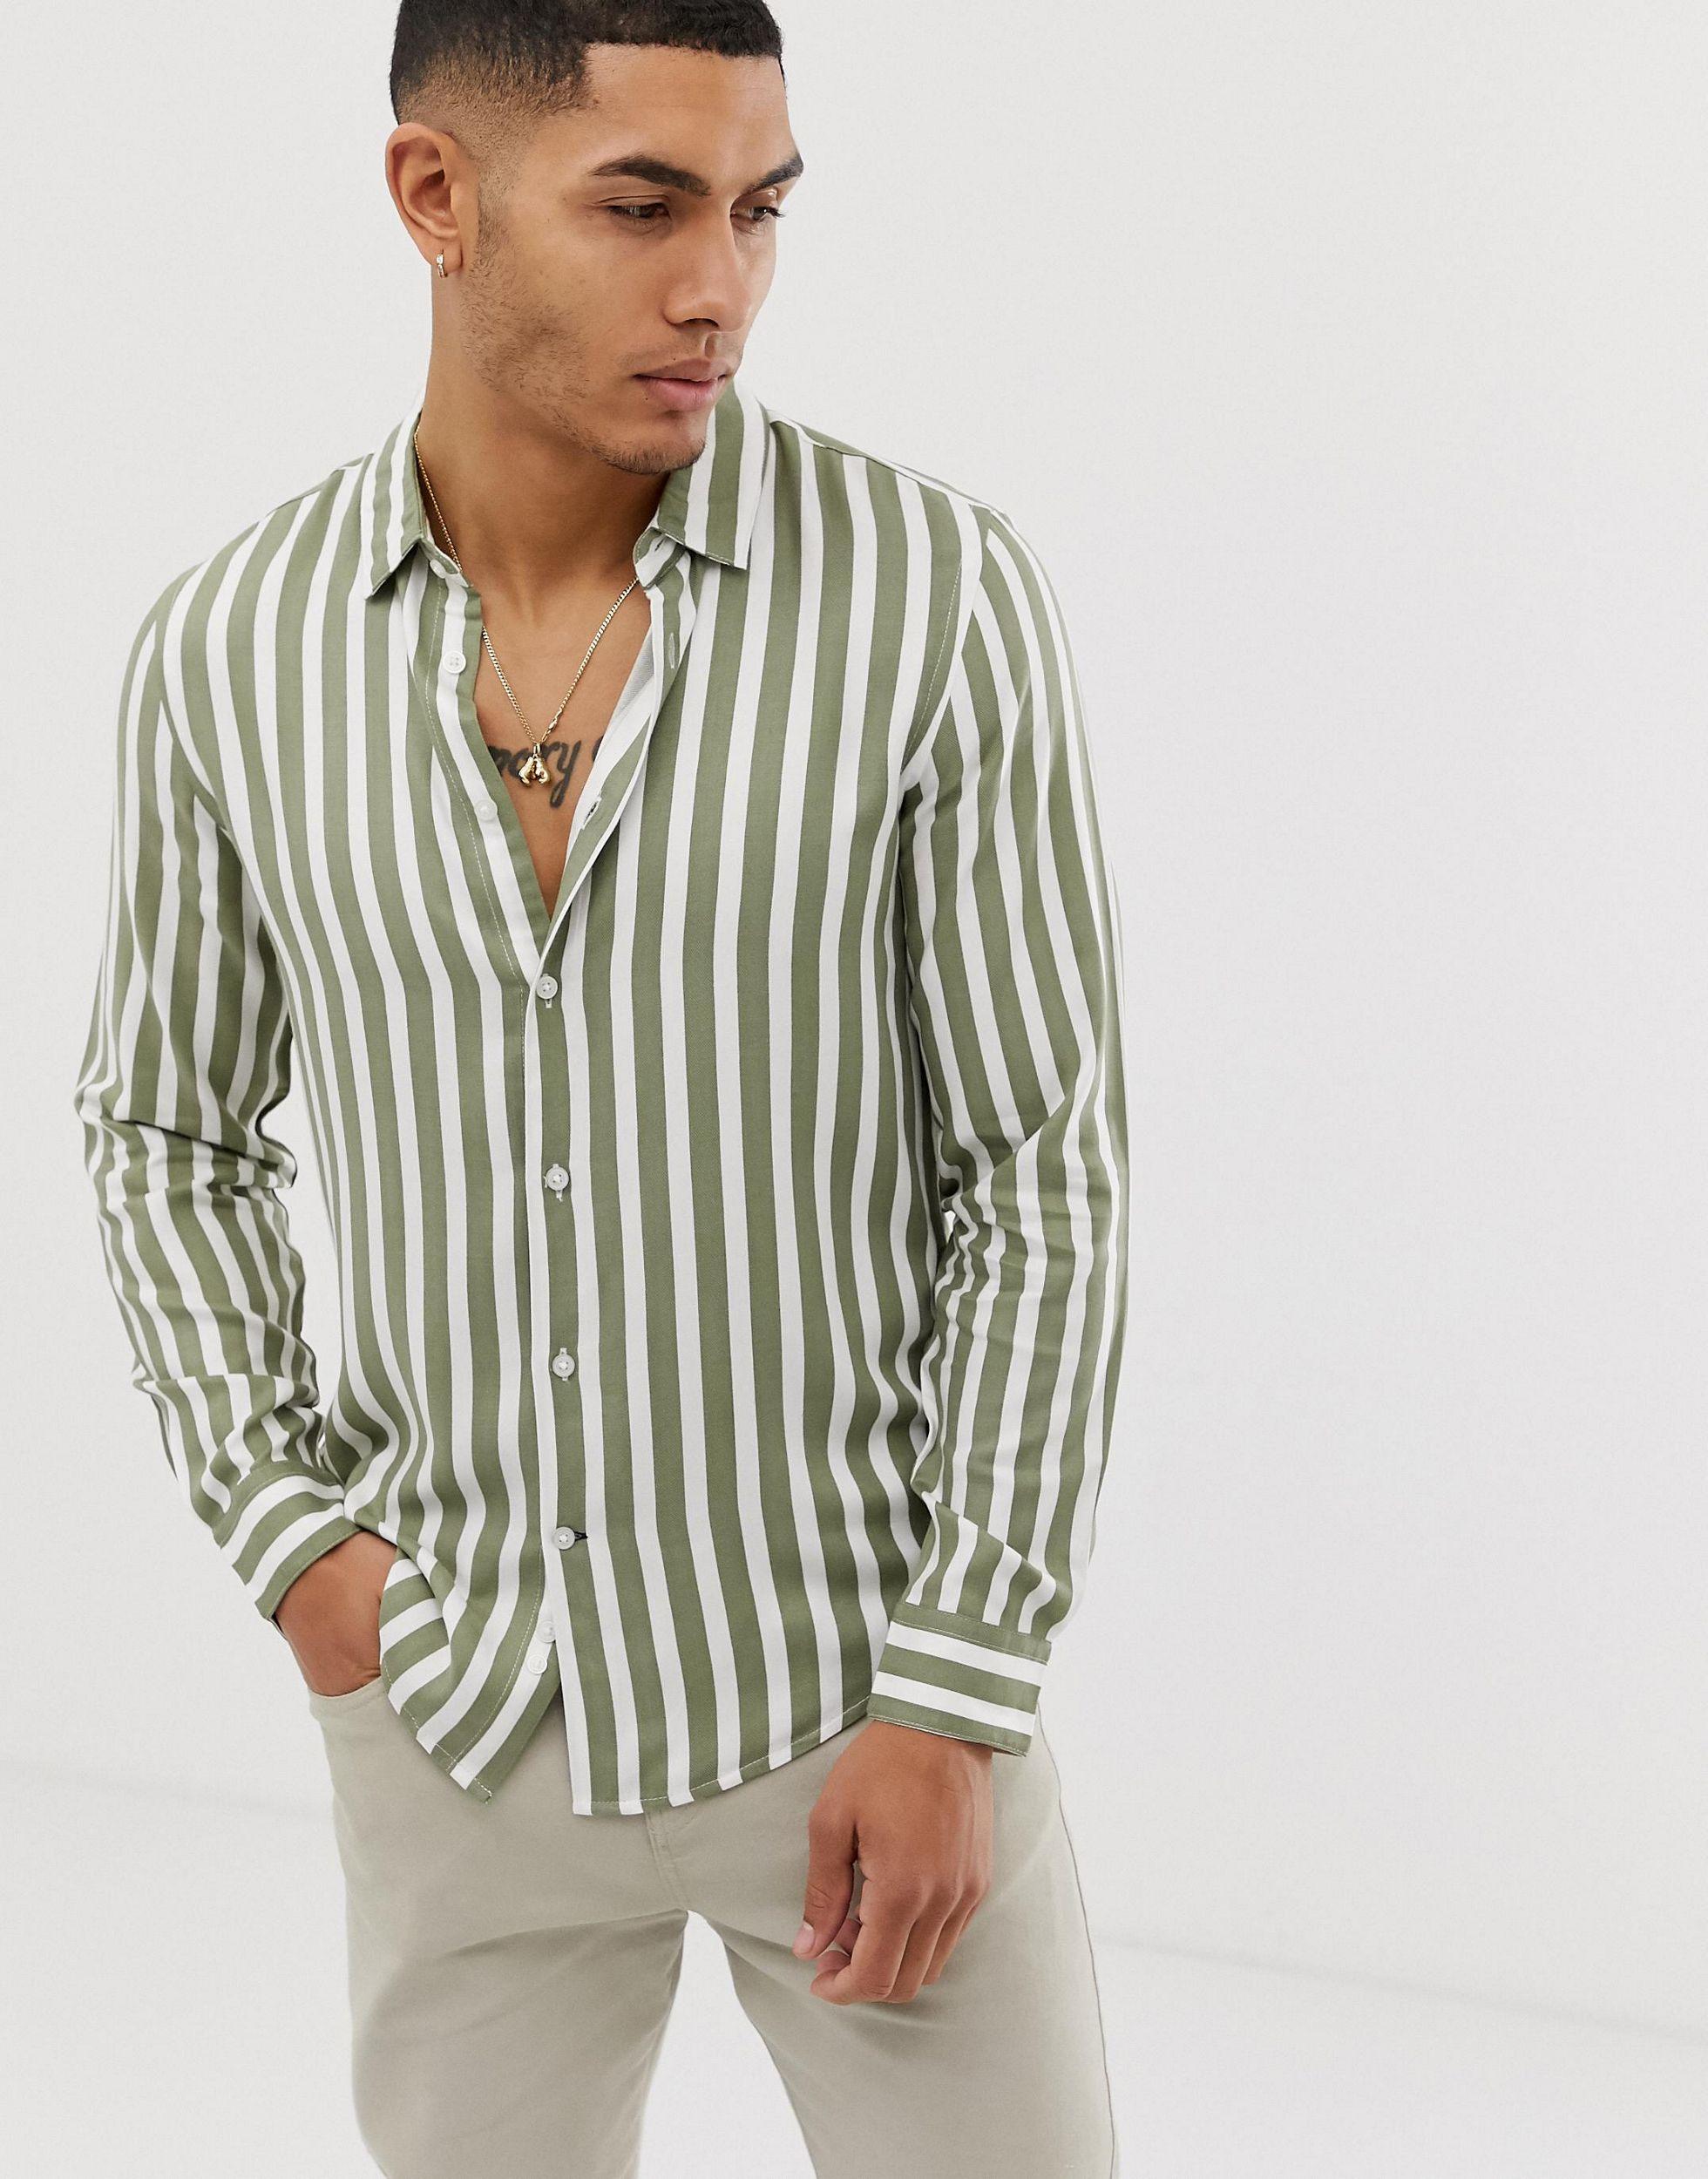 Bershka Denim Vertical Striped Shirt in Green for Men - Lyst